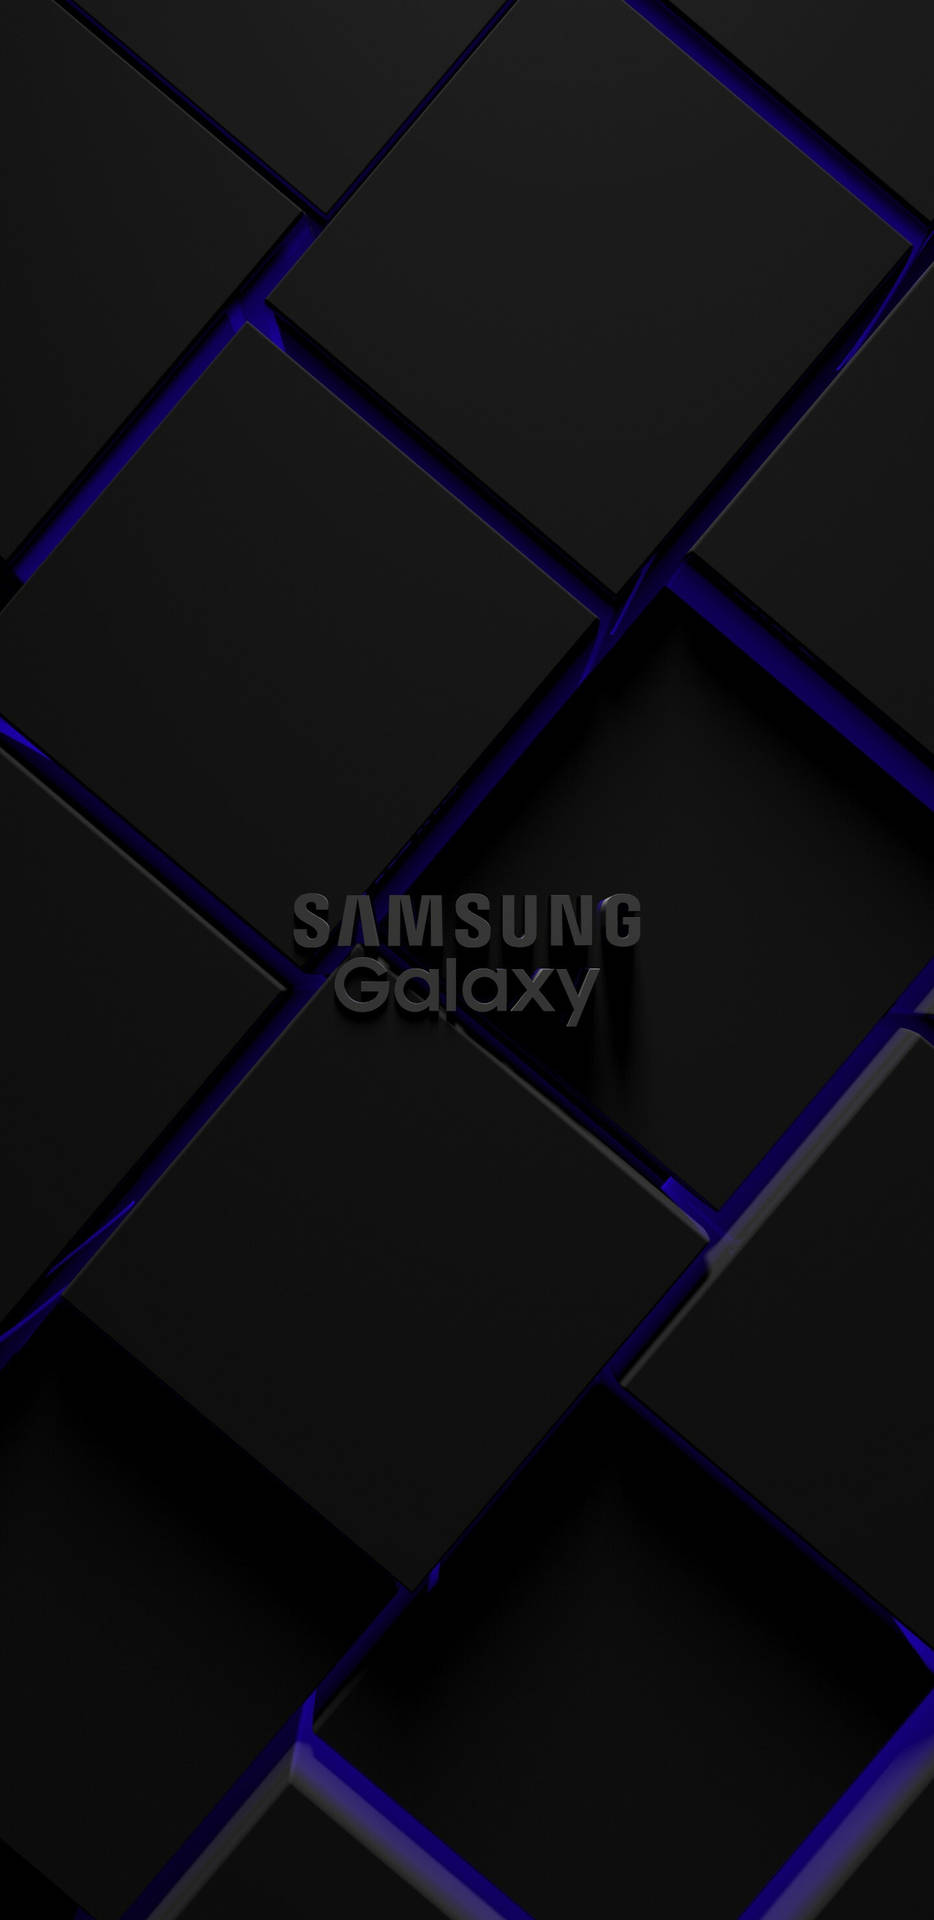 Samsung Galaxy Cubes Purple Light Background